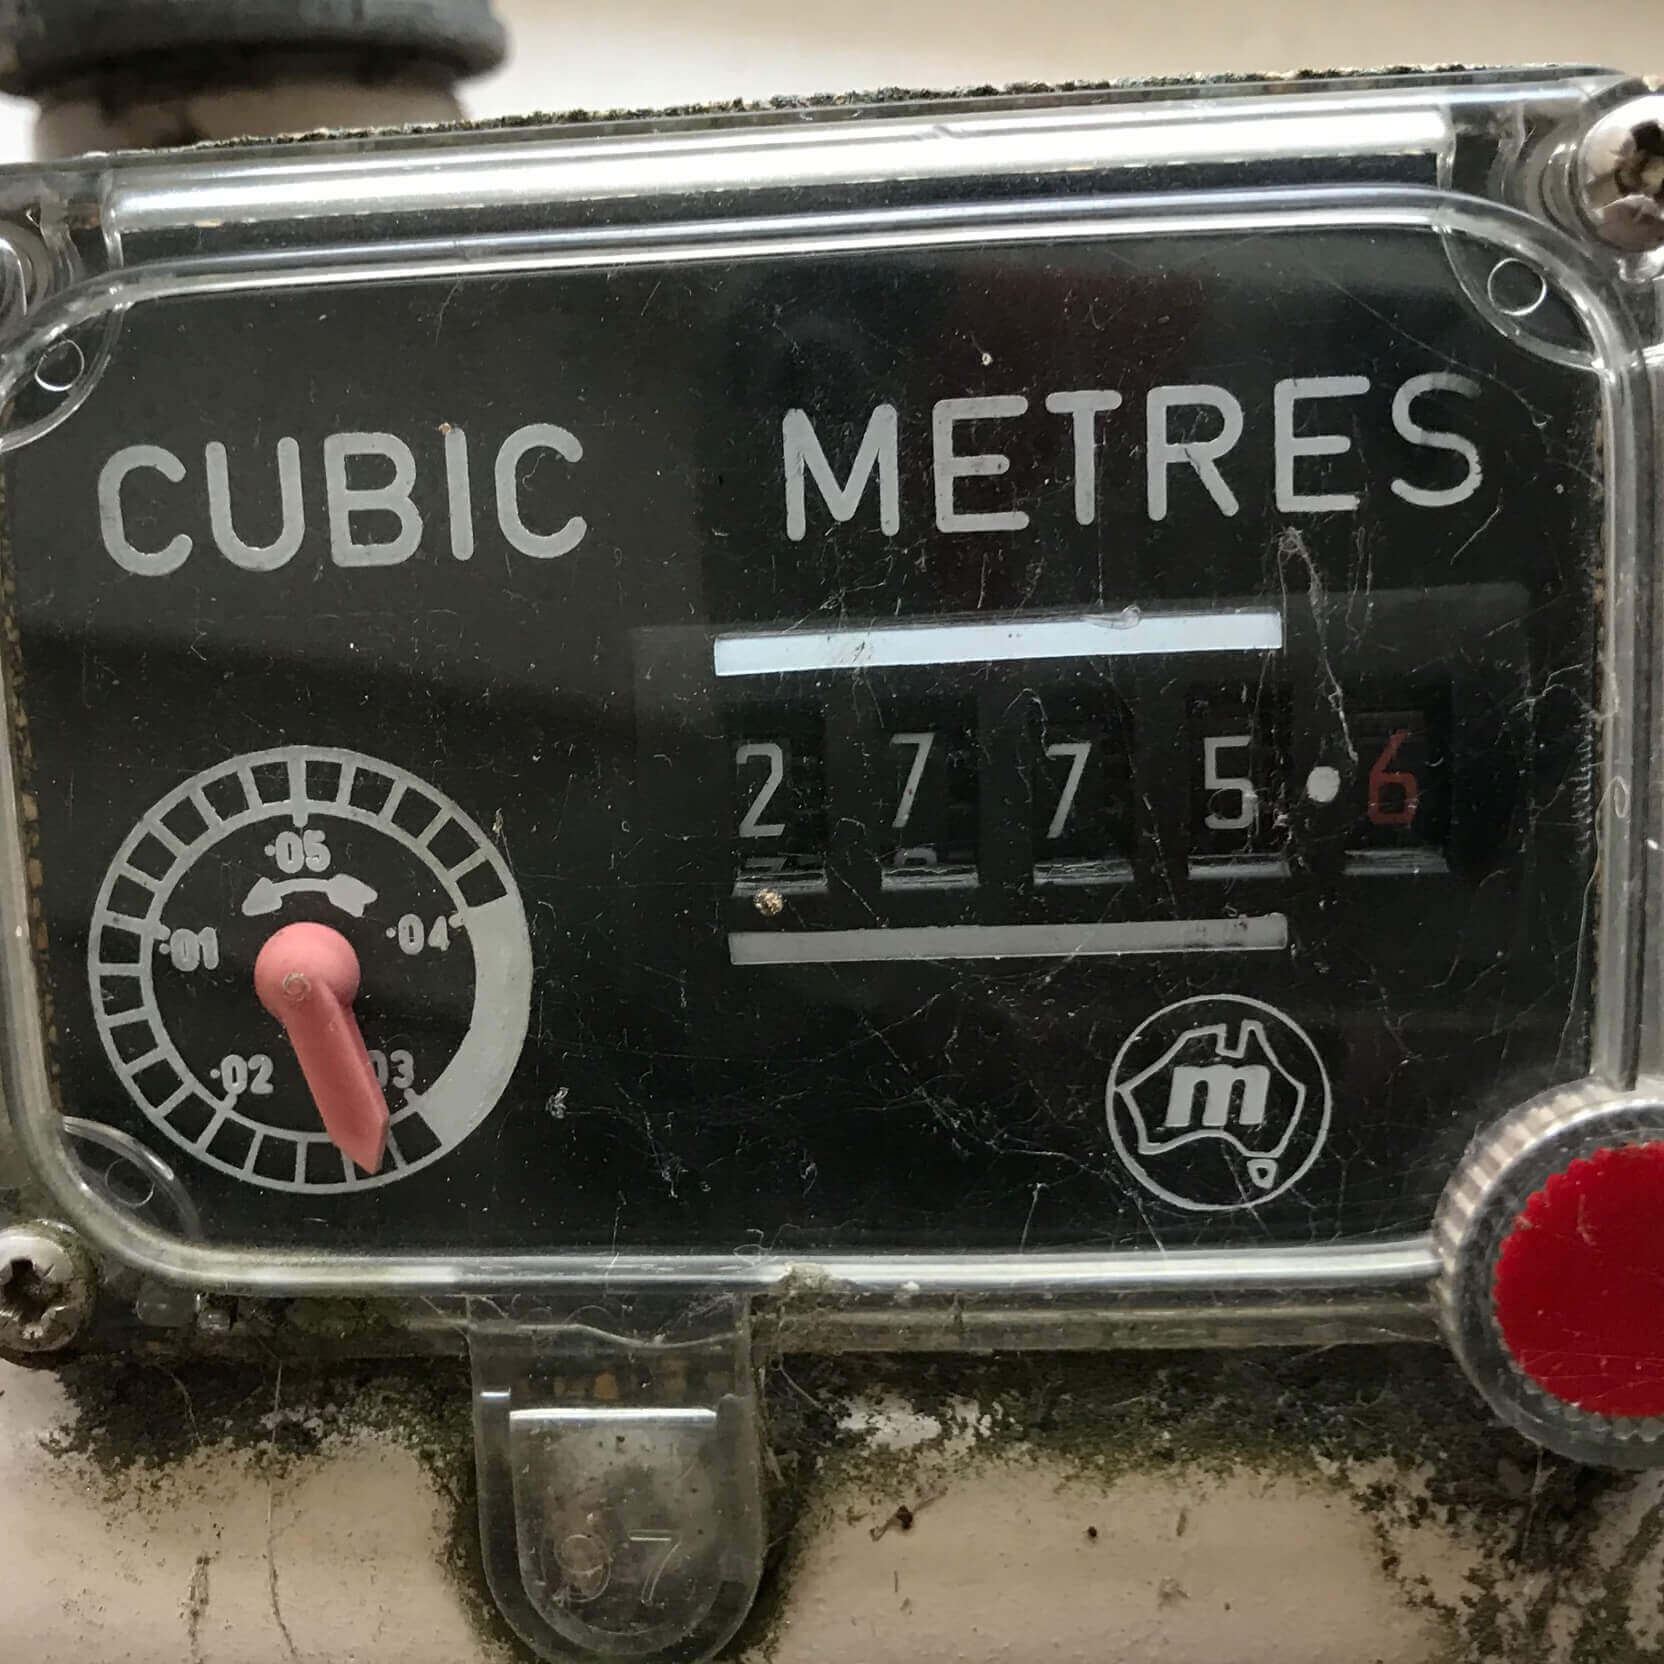 Gas odometer display